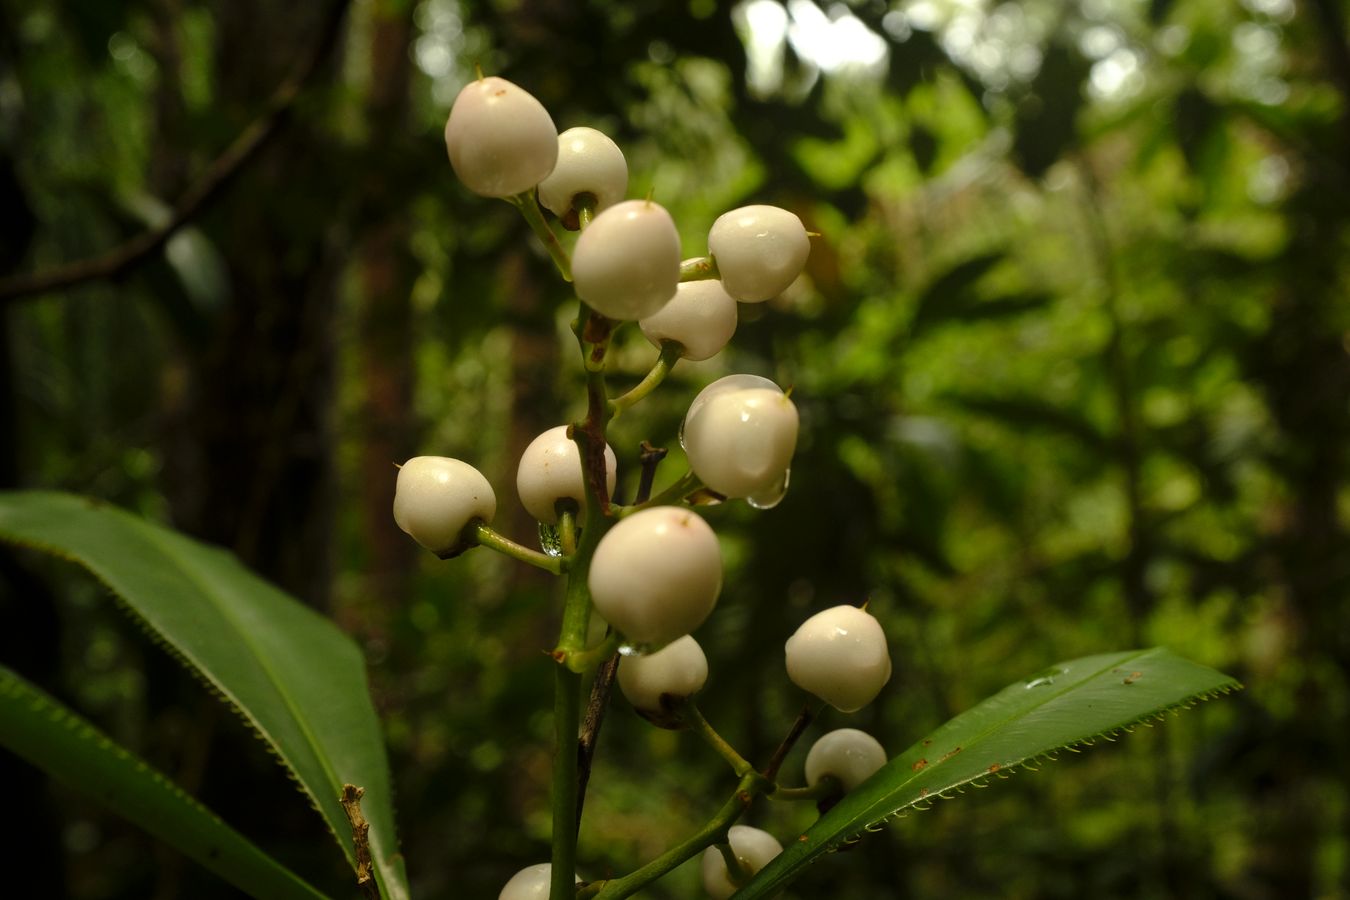 Spicate Eugenia Plant Fruit { Syzygium Zeylanicum }